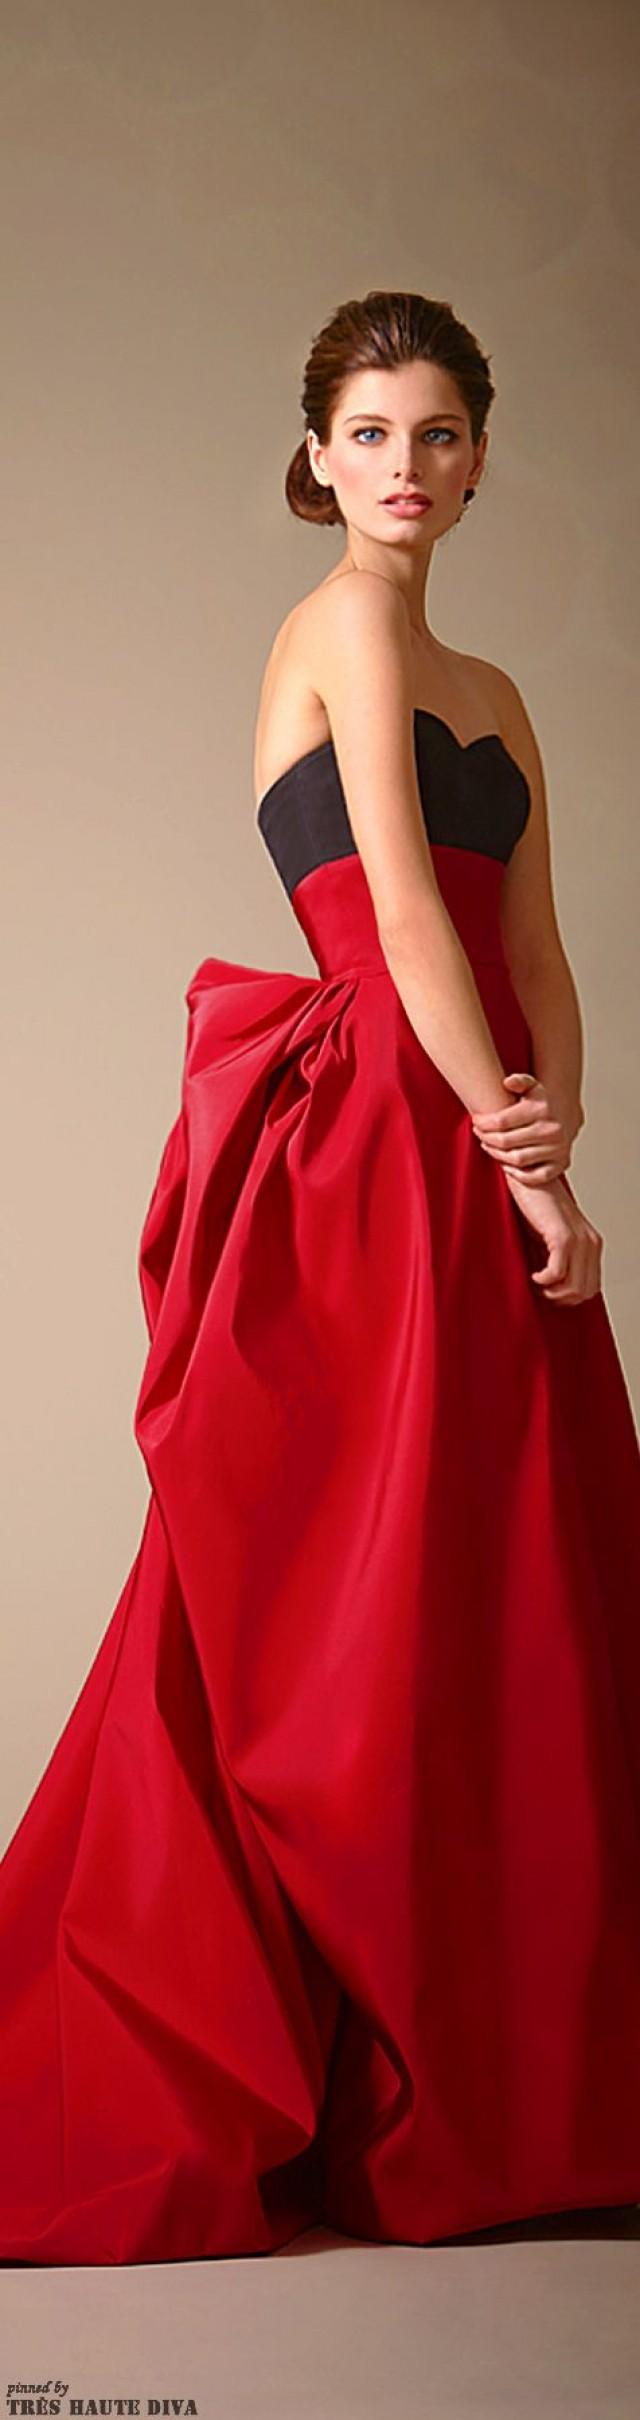 Red Wedding - Gowns...Ravishing Reds #2093251 - Weddbook